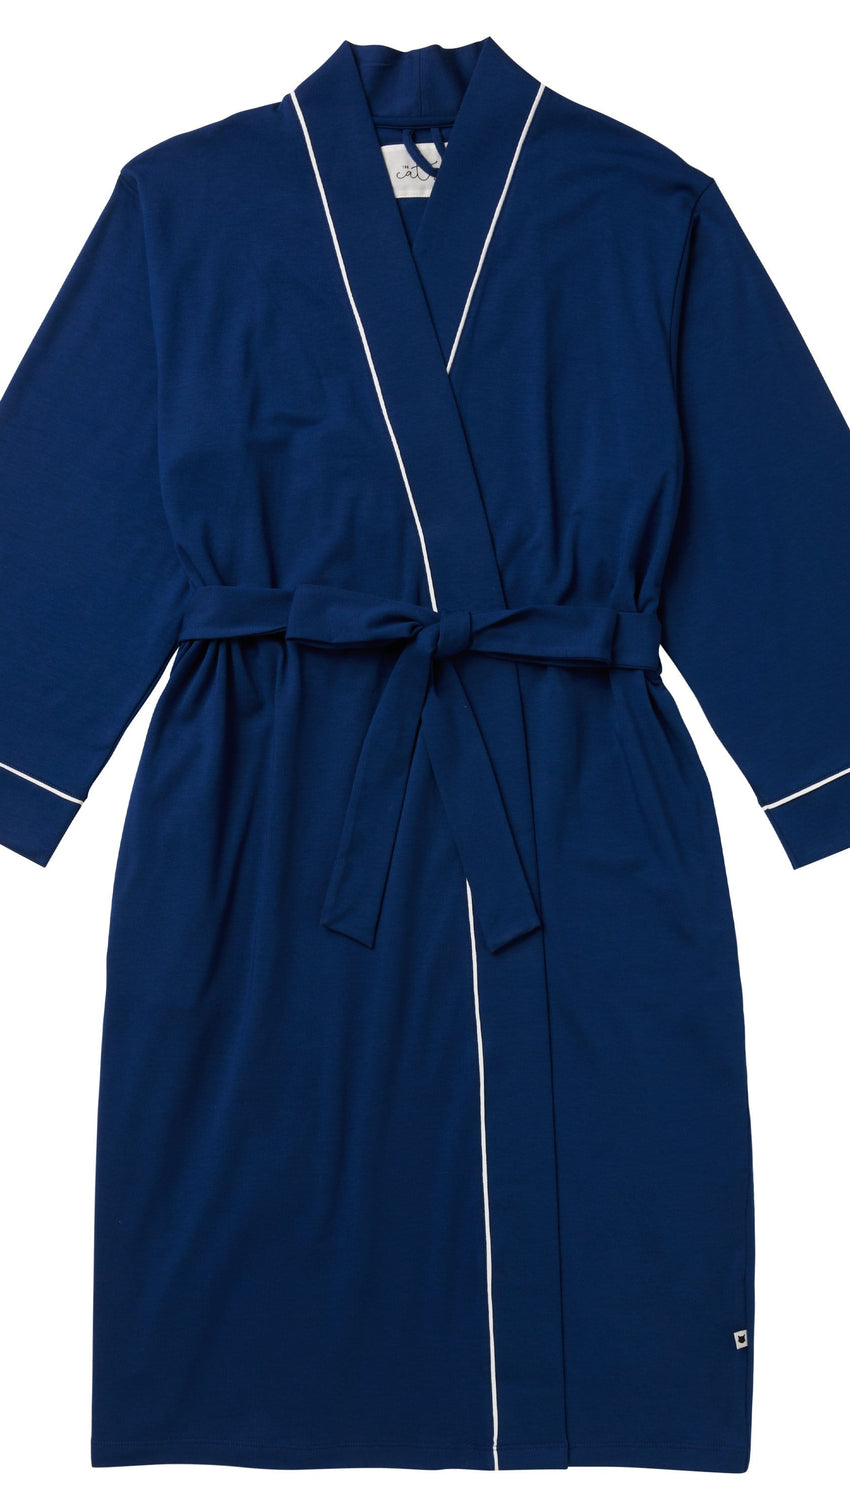 Classic Pima Knit Robe - Marine Blue Extra Marine Blue